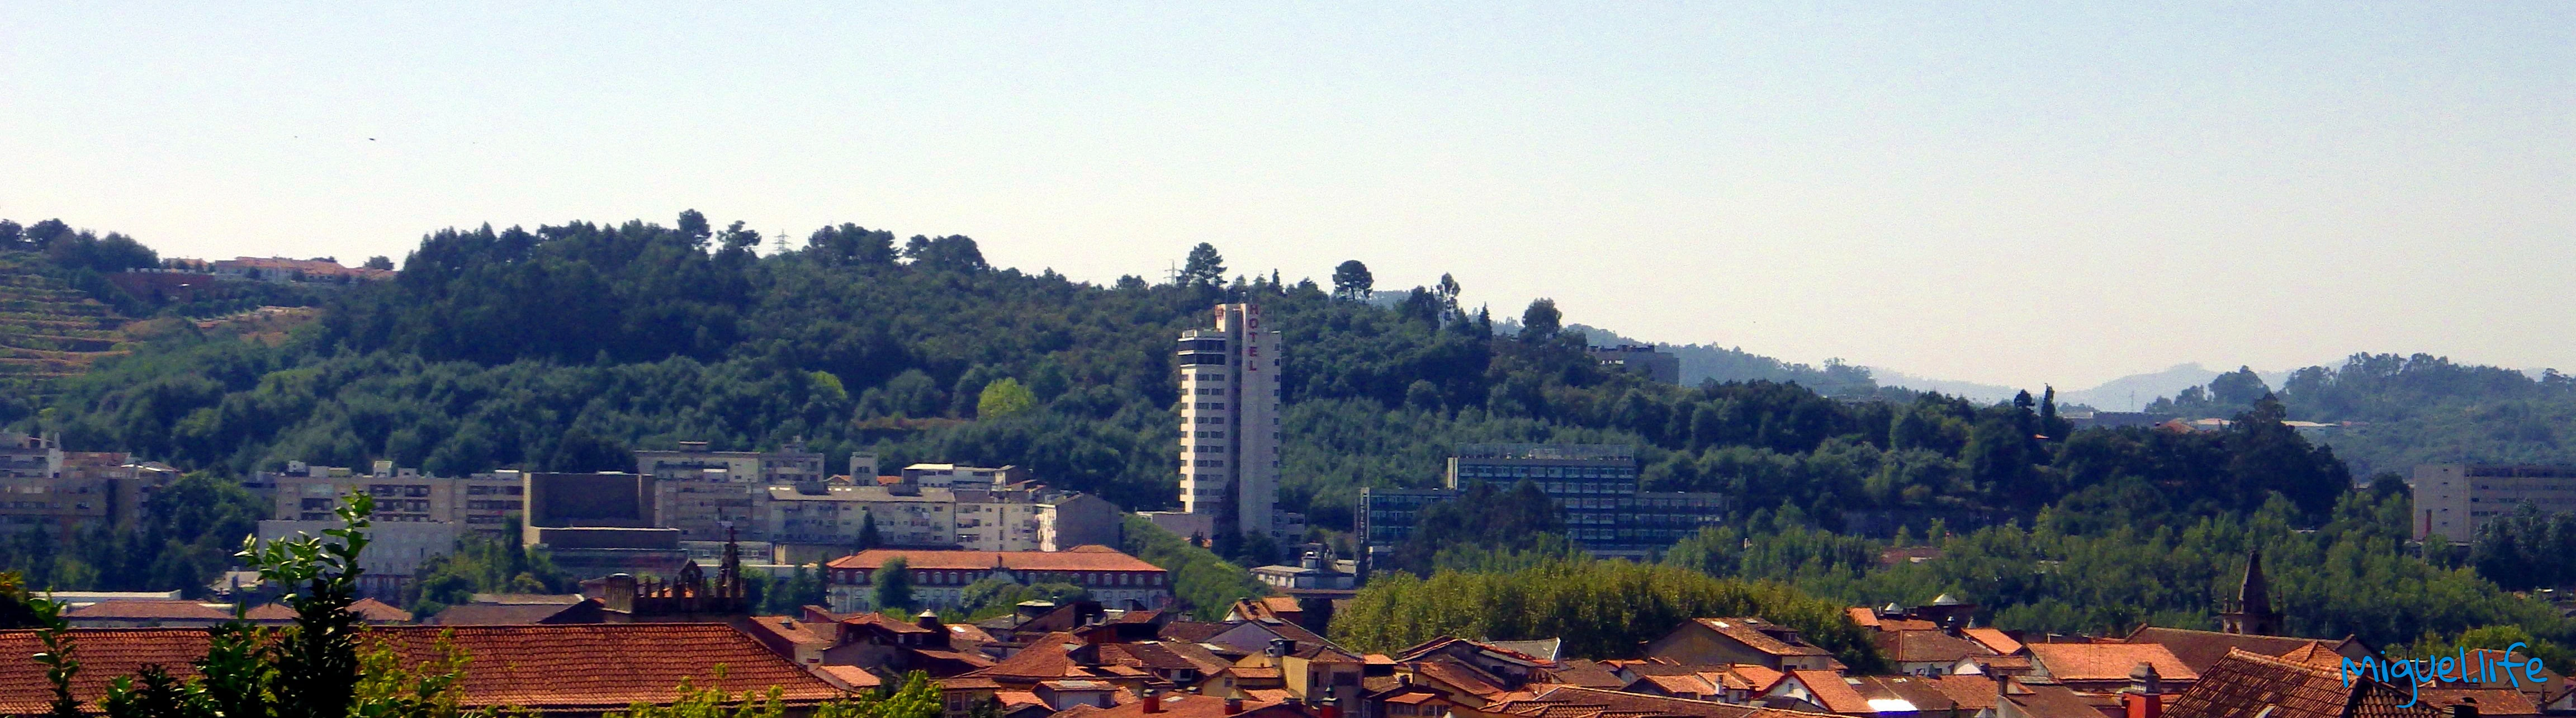 Guimarães, Portugal.